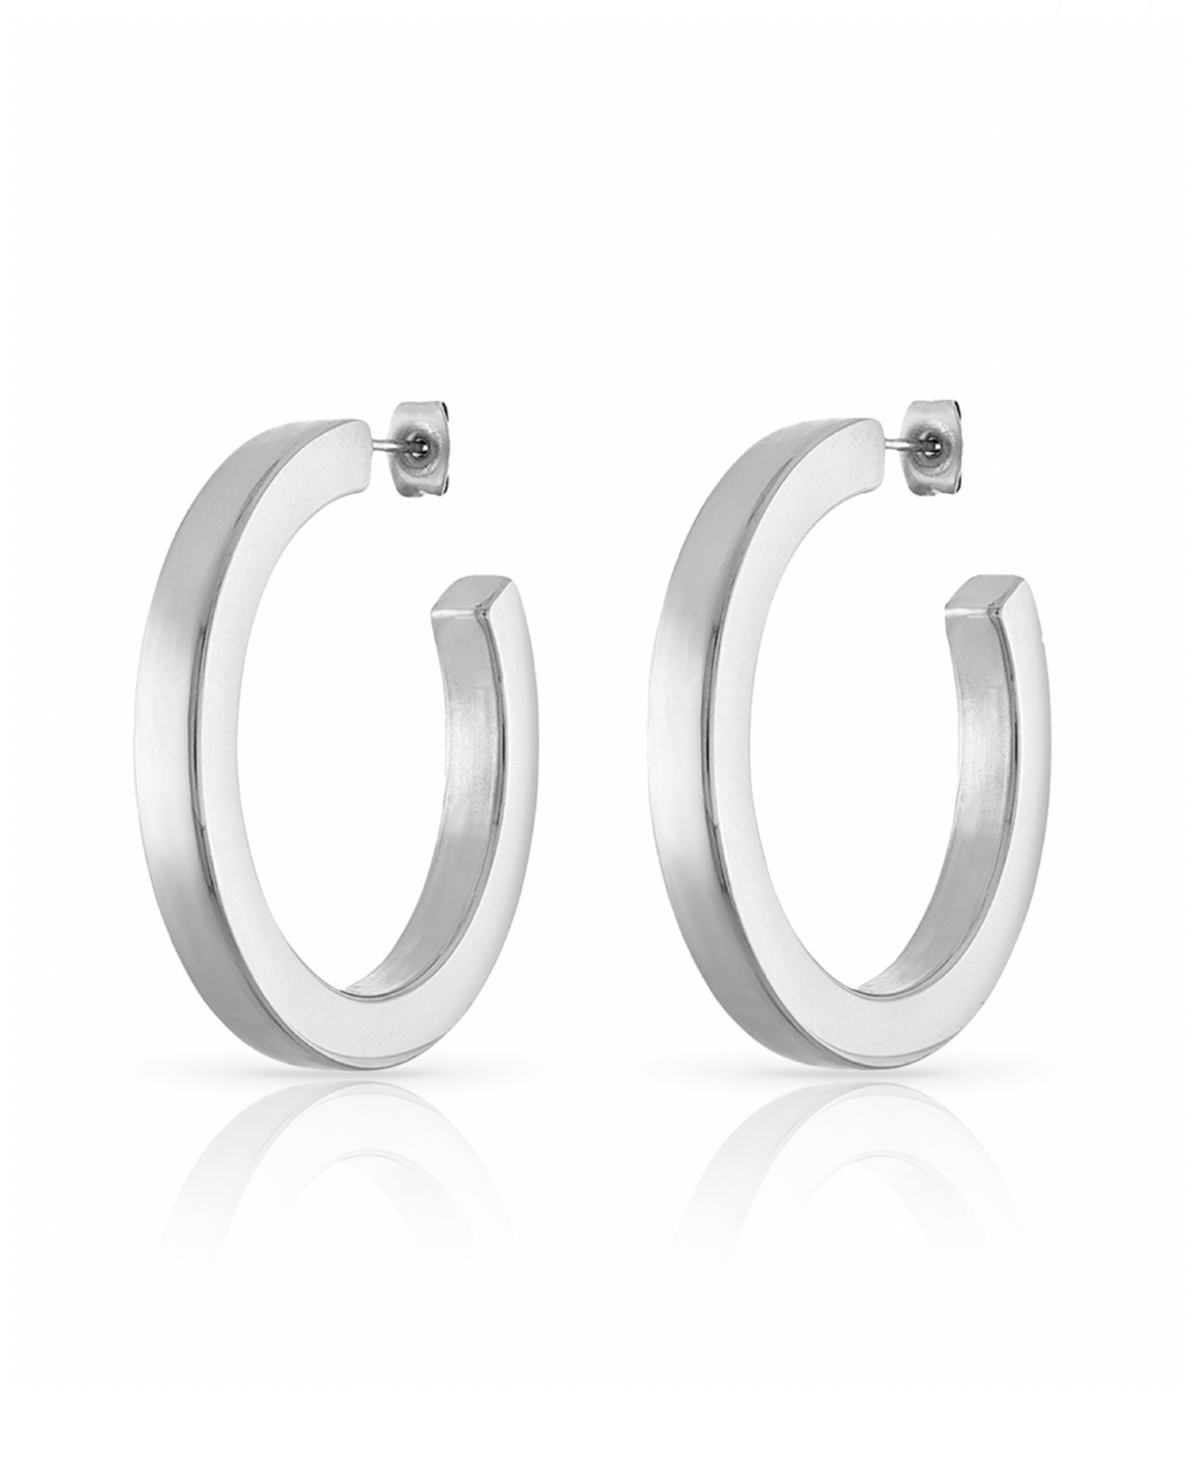 Polished Non-Tarnish Square Edge Hoop Earrings, 1.65" - Silver